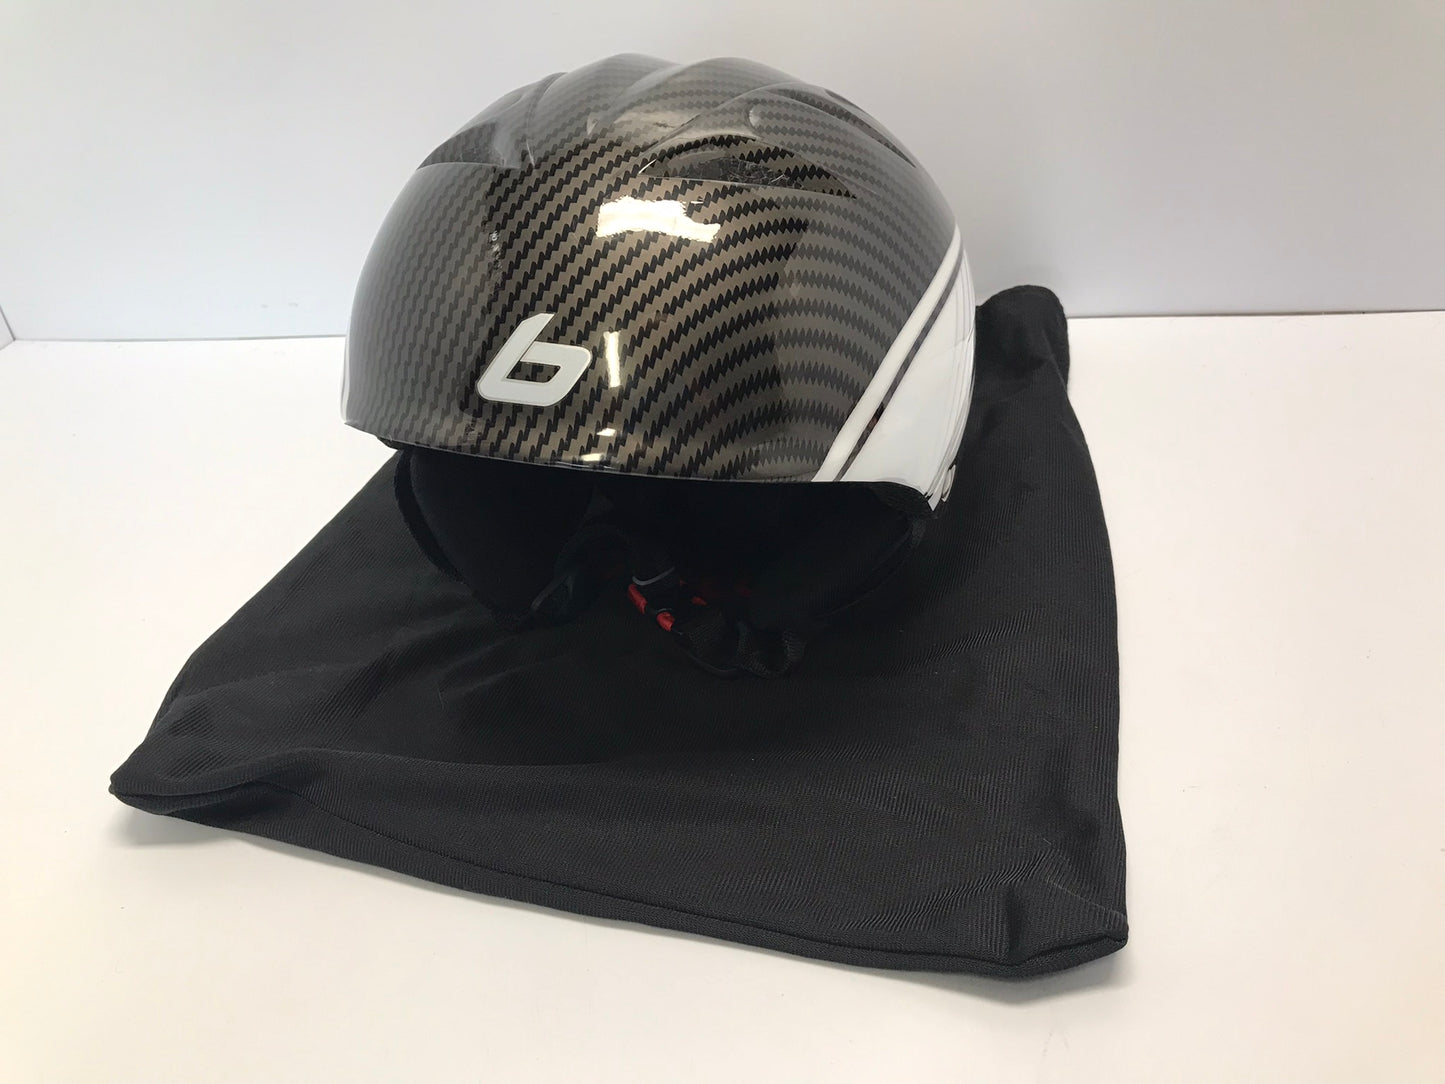 Ski Helmet Child Size 4-6 Bolle With Twist Sizeron Black Like New With Bag